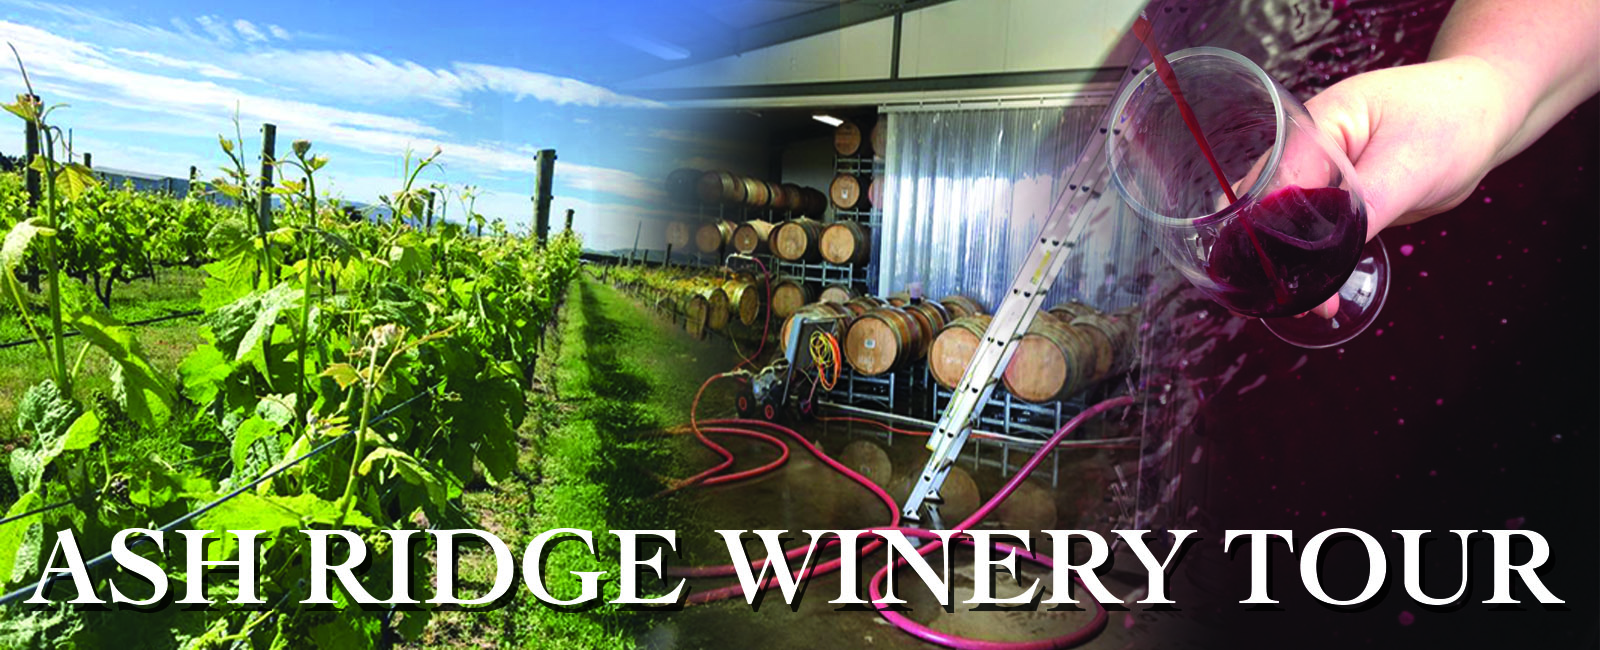 Ash Ridge Winery Tours